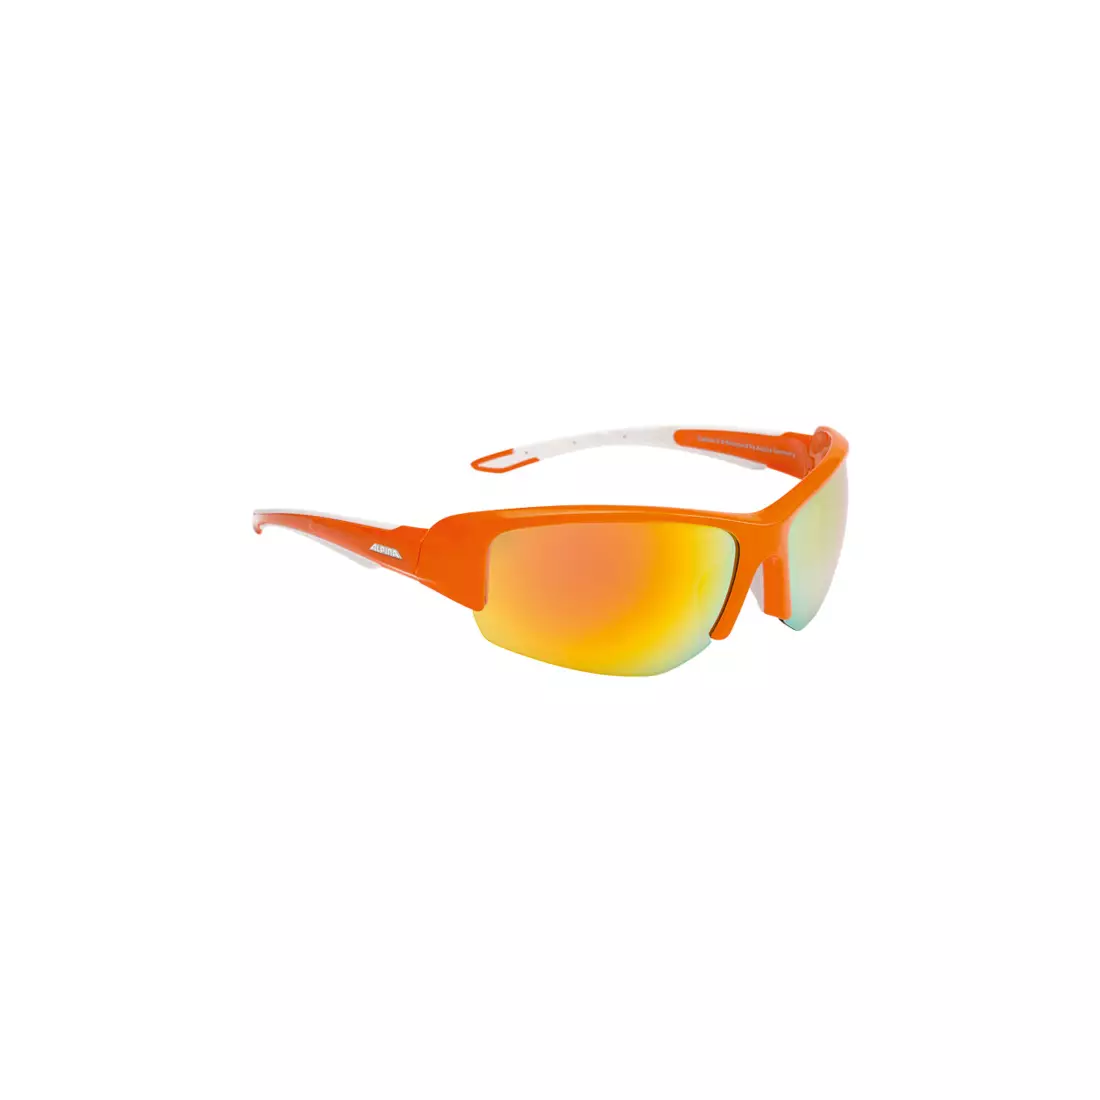 Športové okuliare ALPINA - CALLUM 2.0 - oranžovo-biele / oranžové keramické zrkadlové sklo.